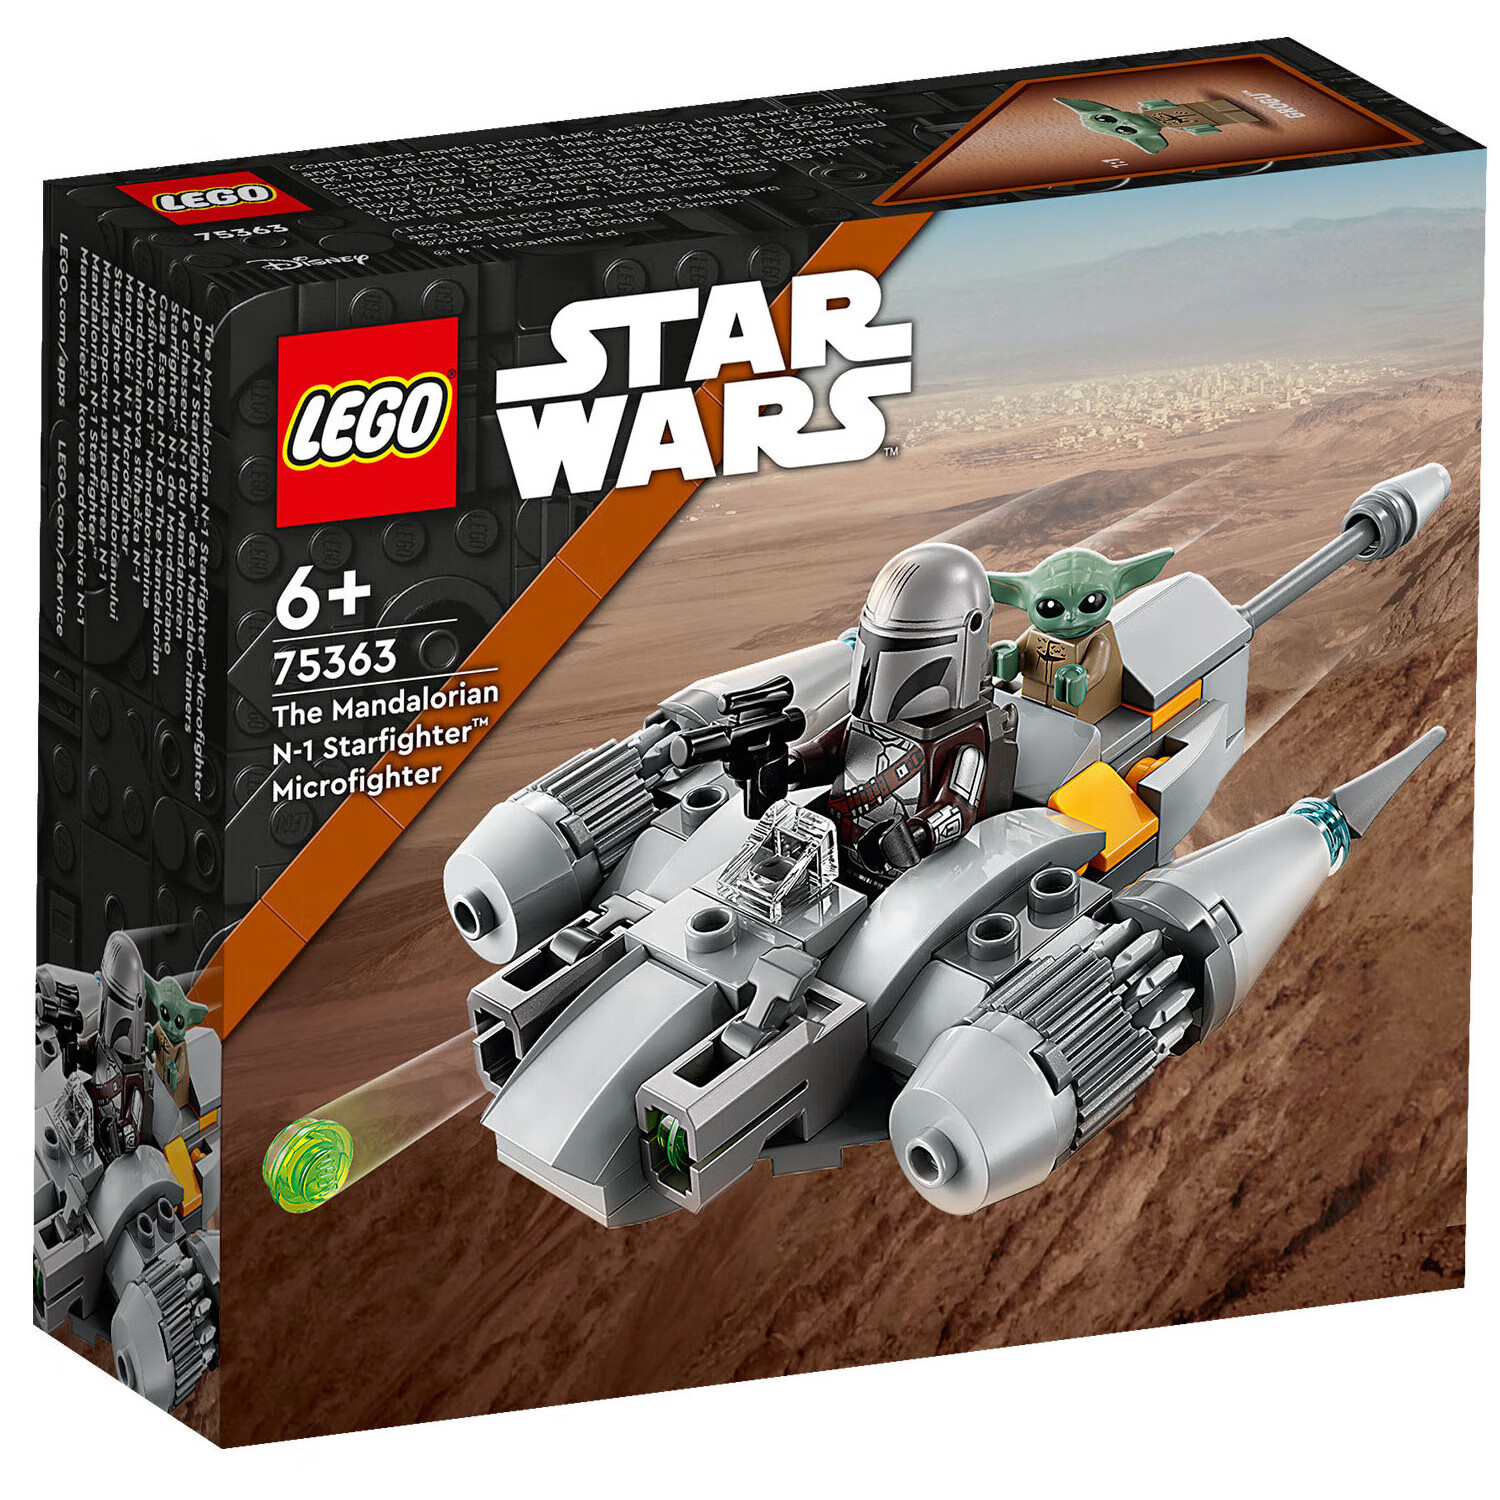 LEGO 乐高 星球大战系列 75363 曼达洛人N-1迷你战机 101.15元